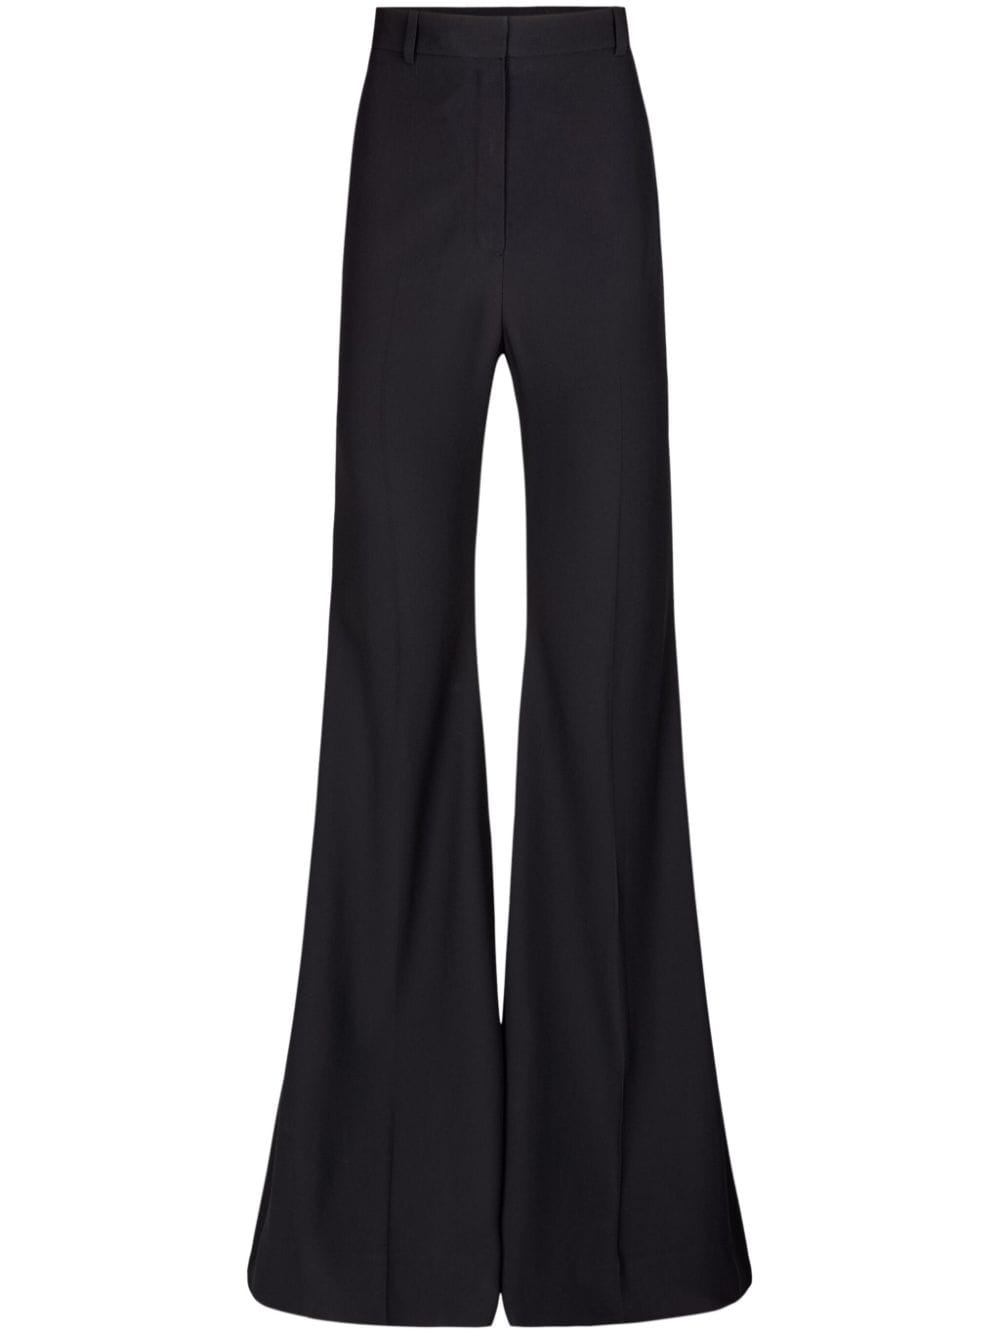 Image 1 of Nina Ricci high-waist flared trousers